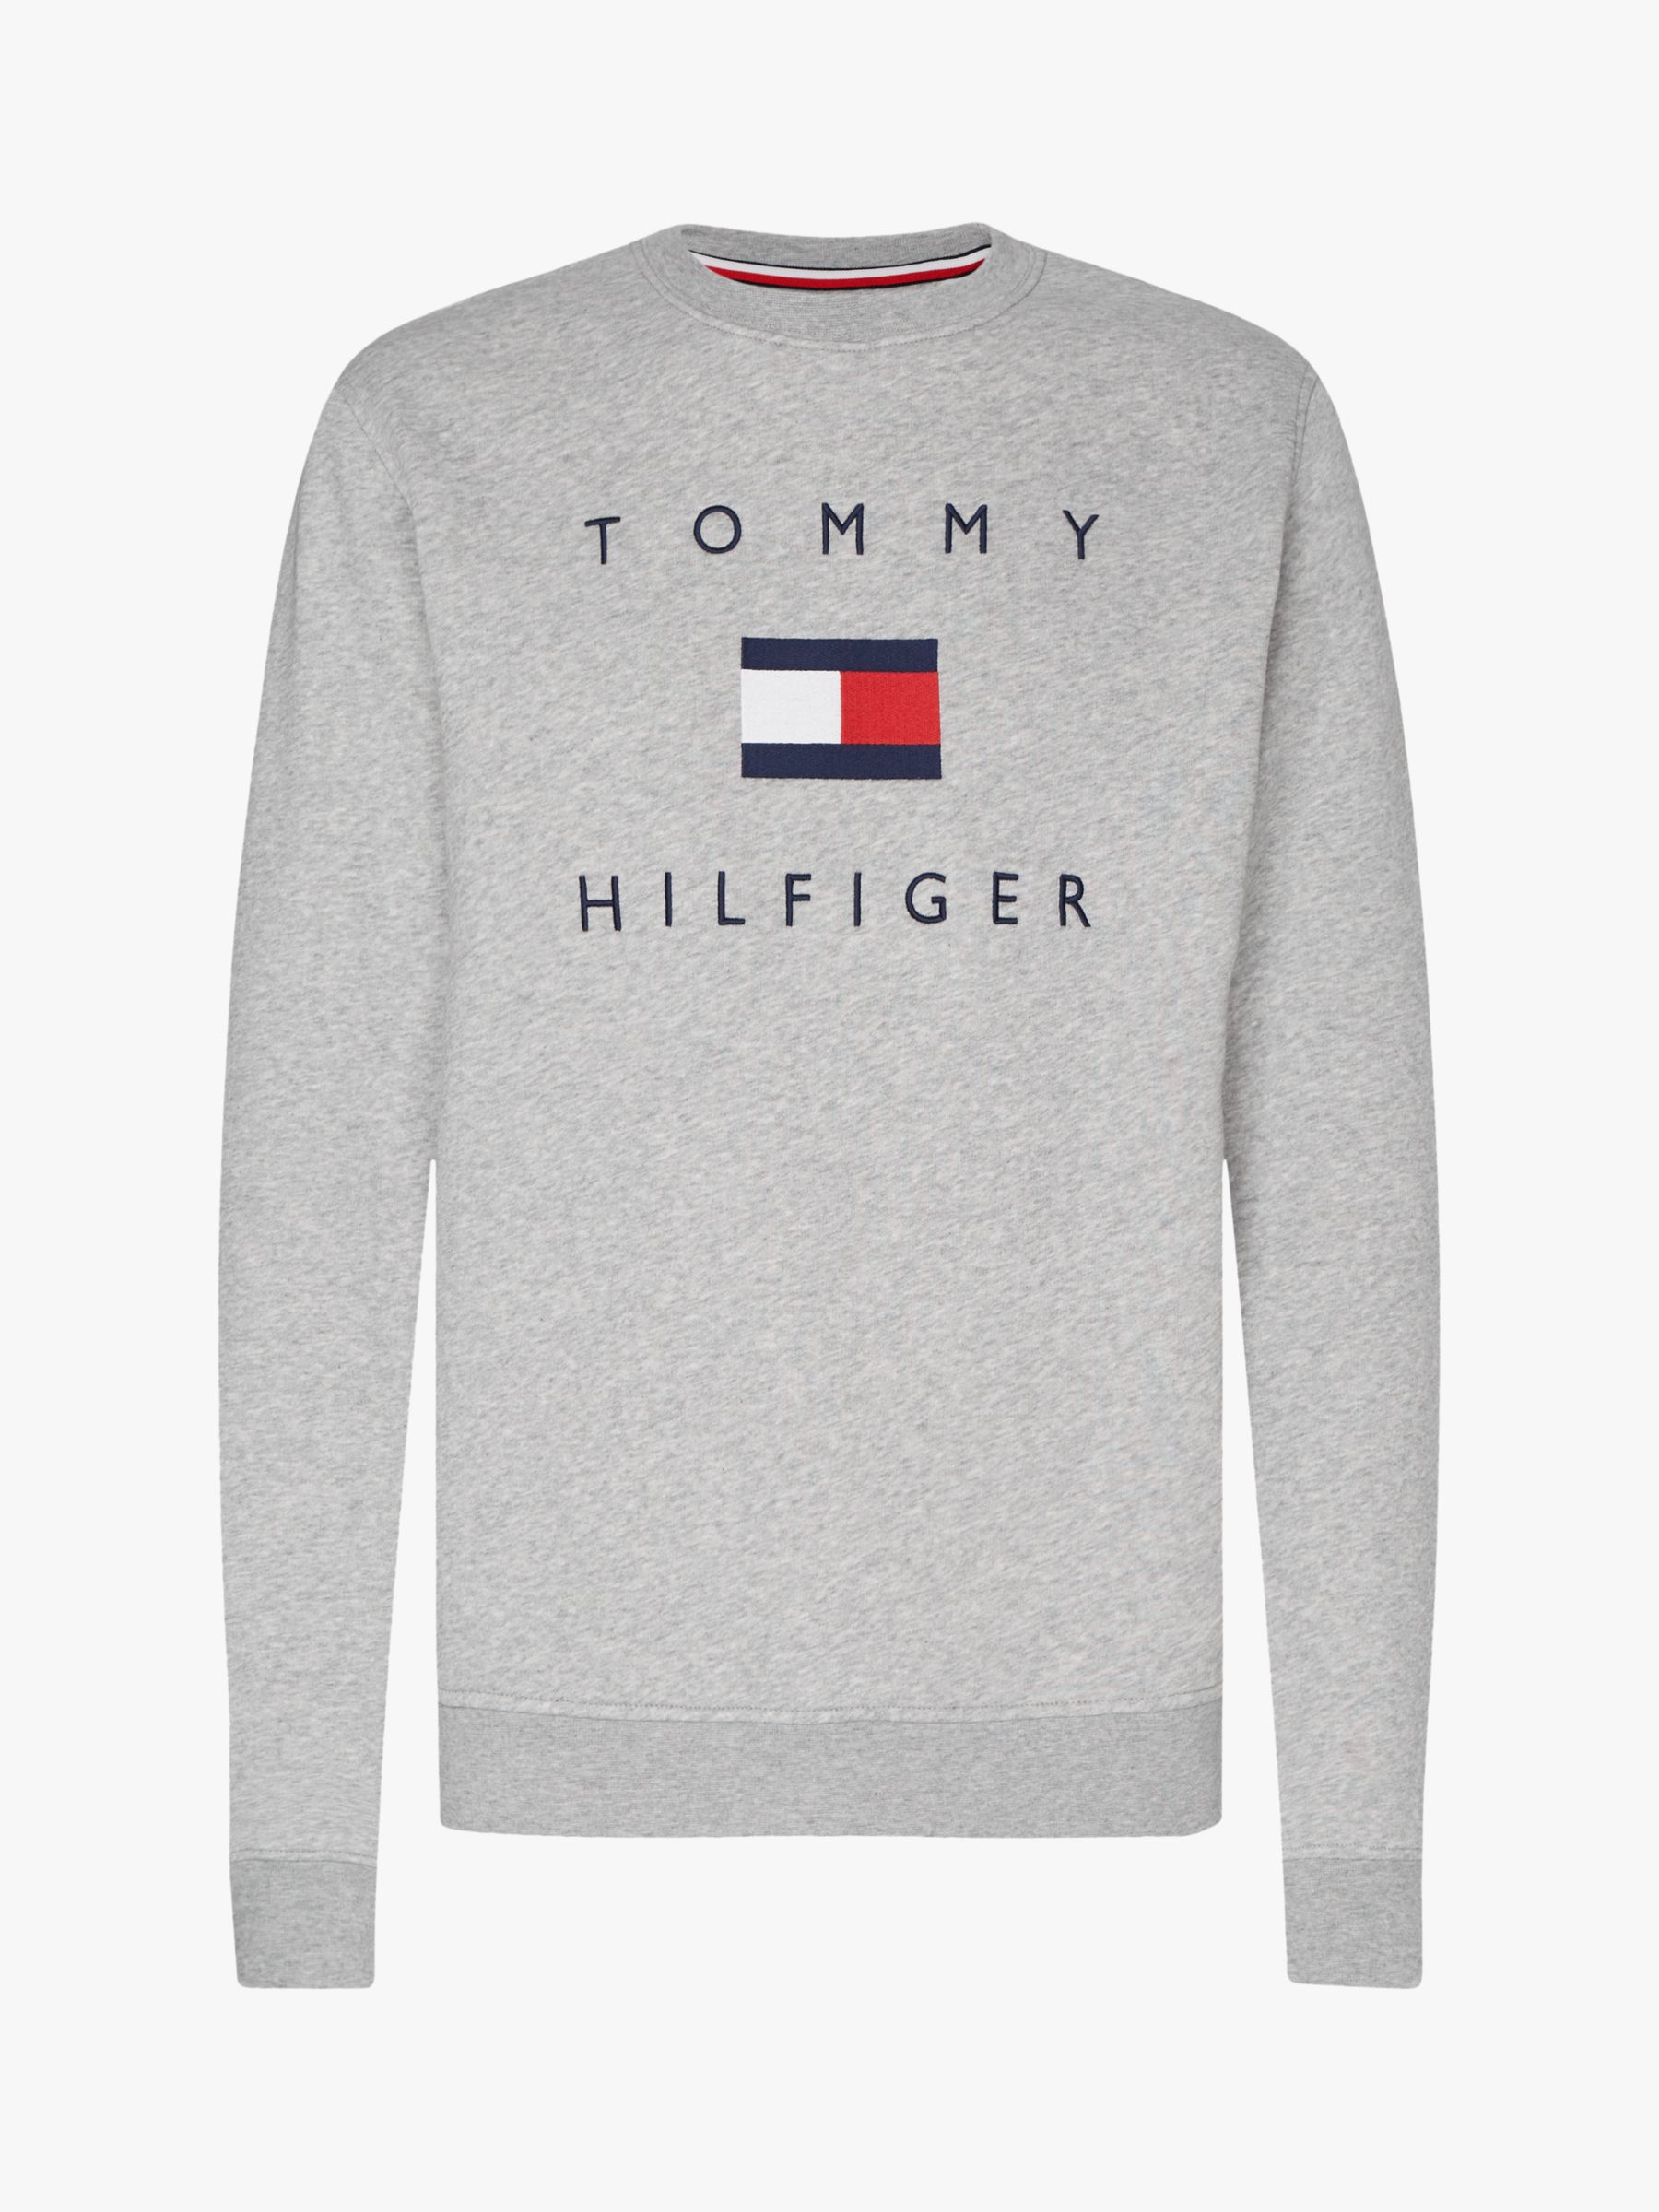 Tommy Hilfiger Flag Logo Sweatshirt at 